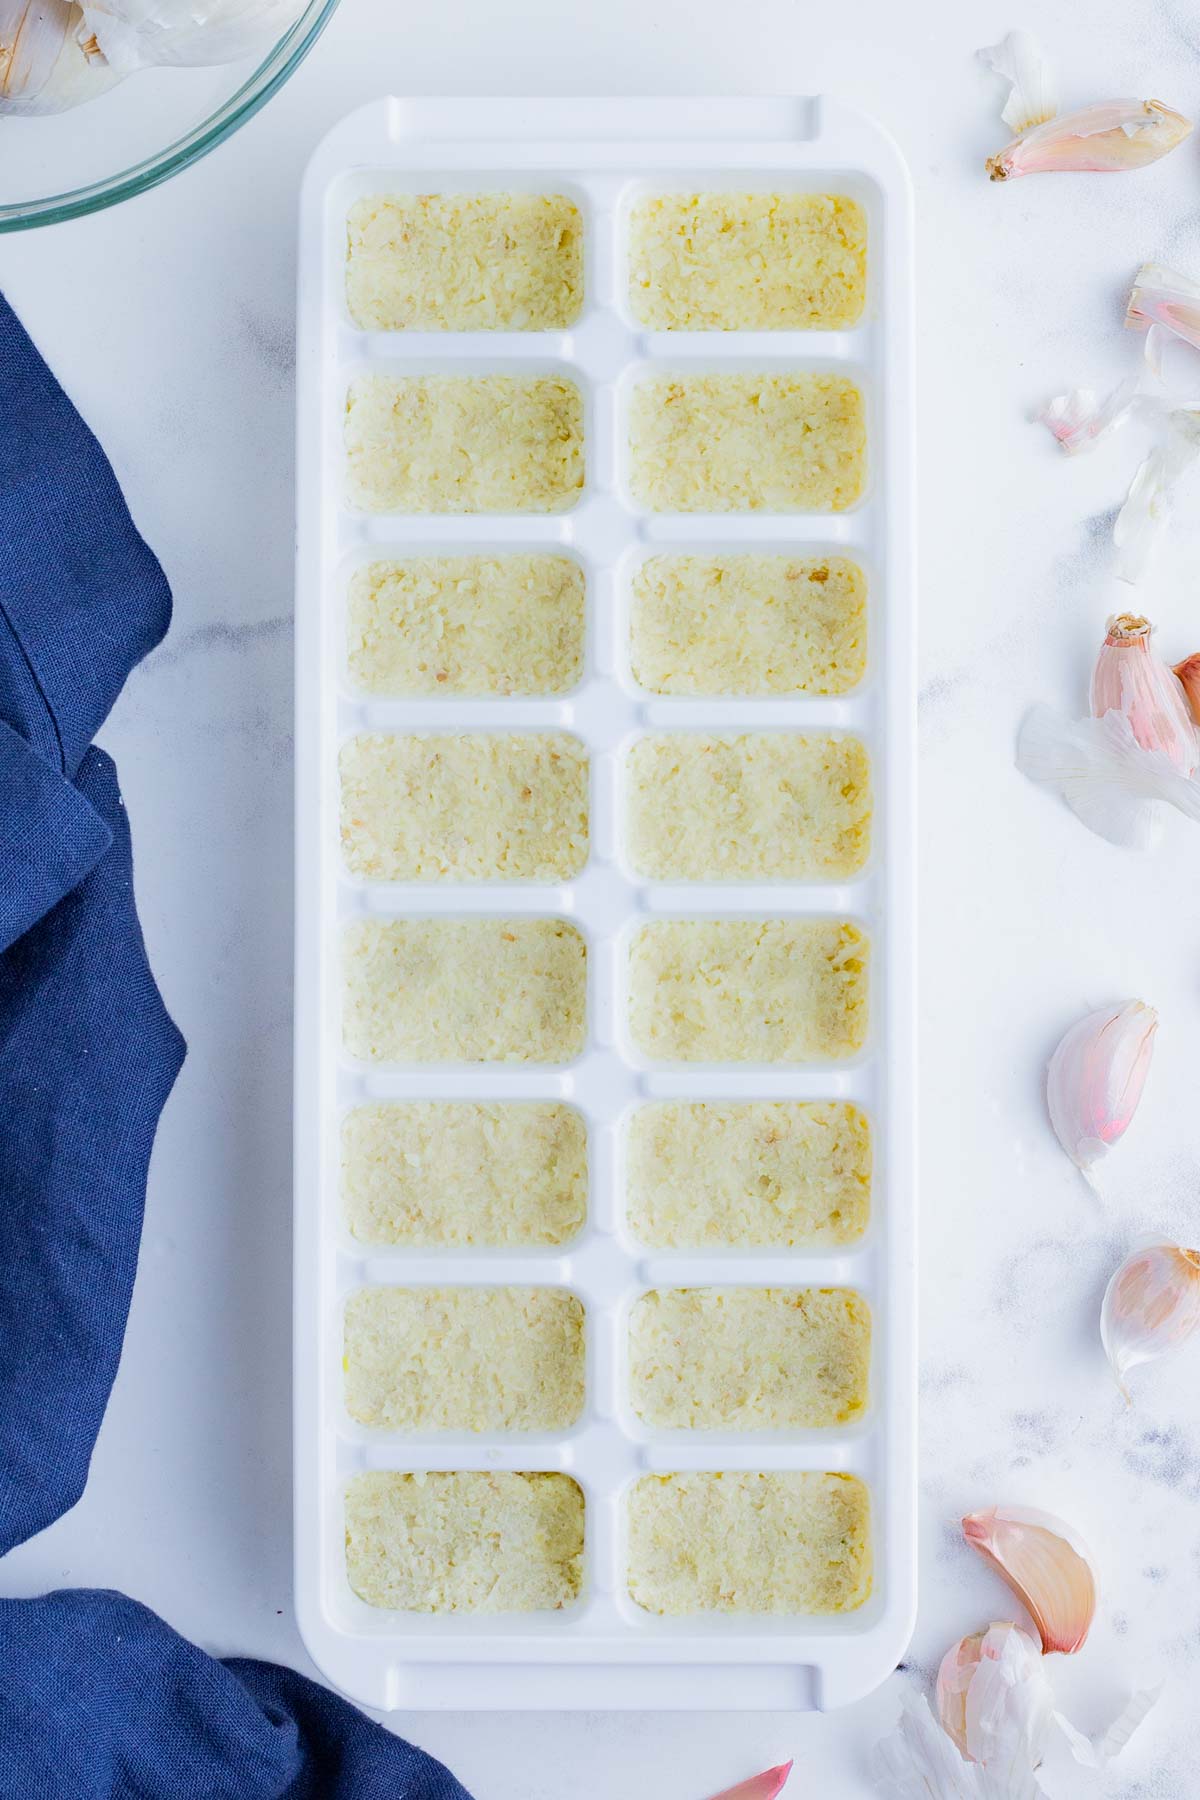 Frozen garlic in ice cube trays.